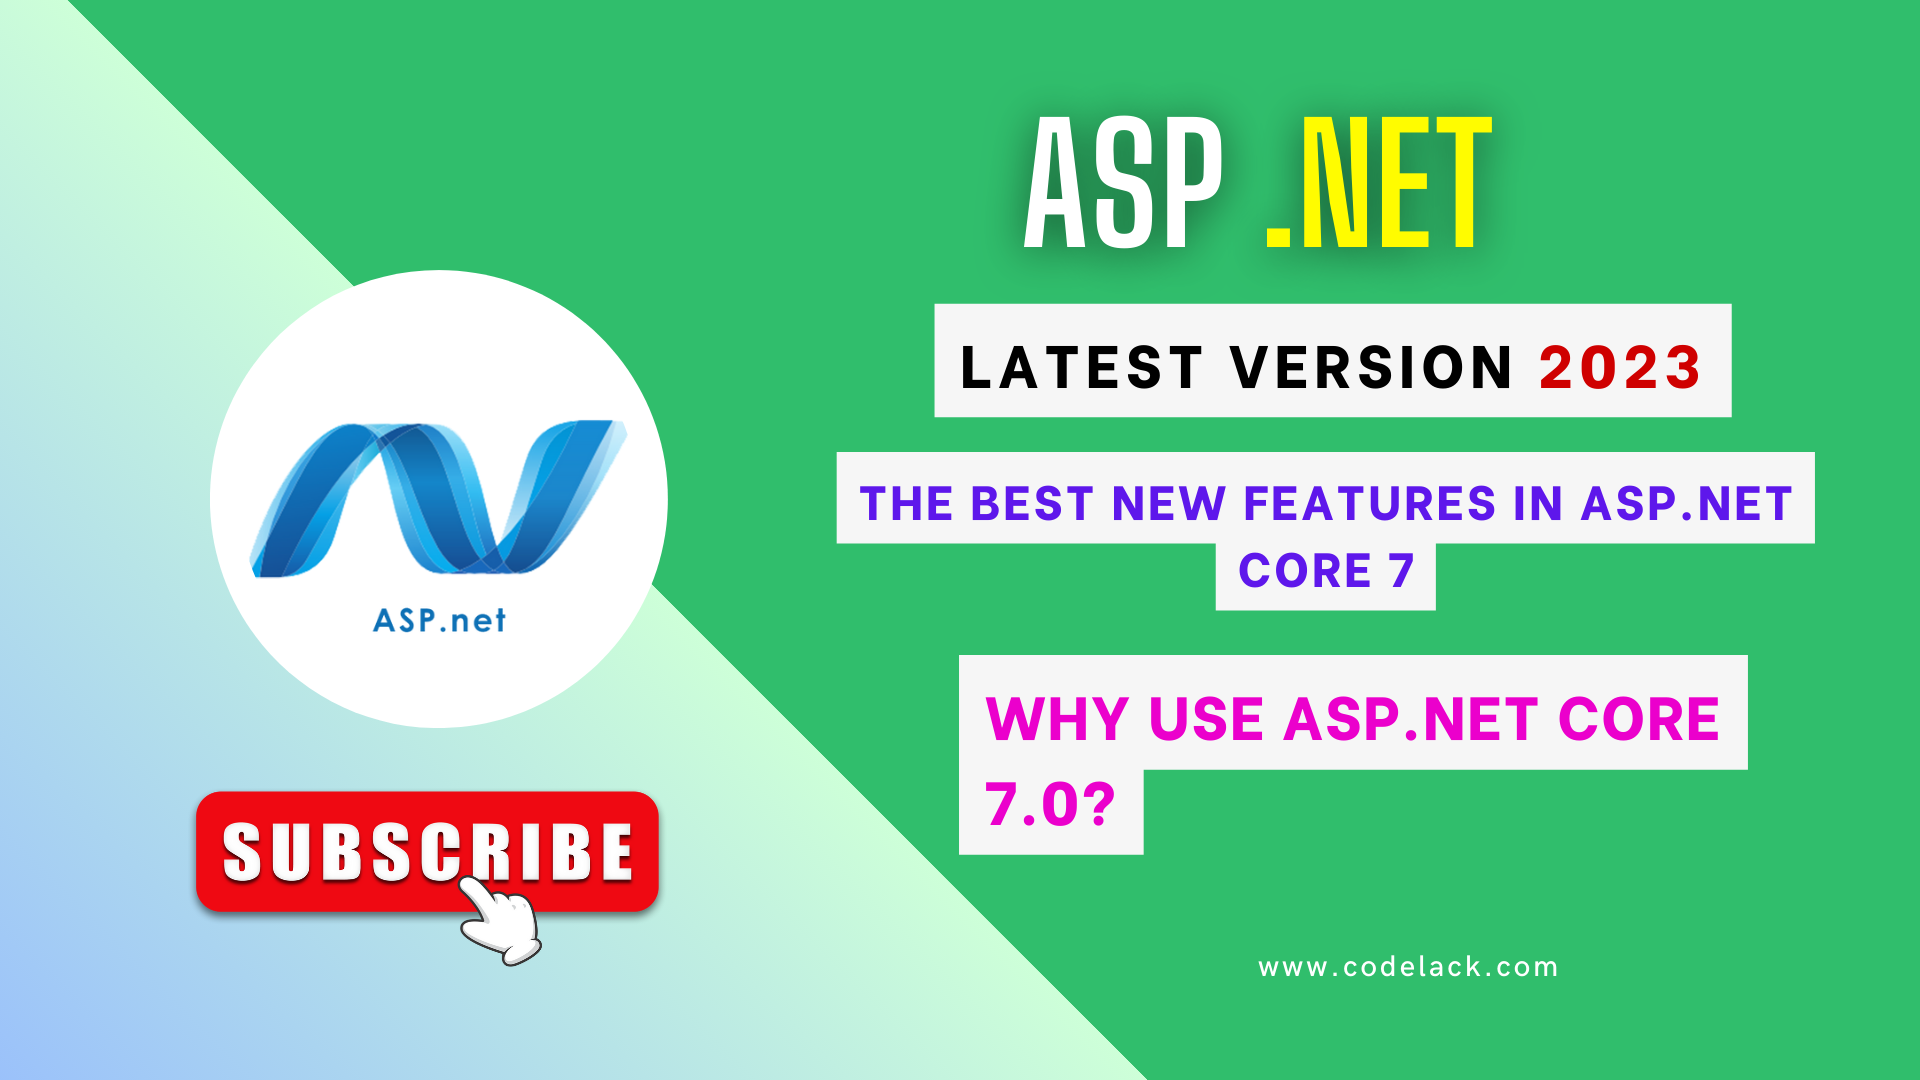 ASP.NET Latest Version 2023